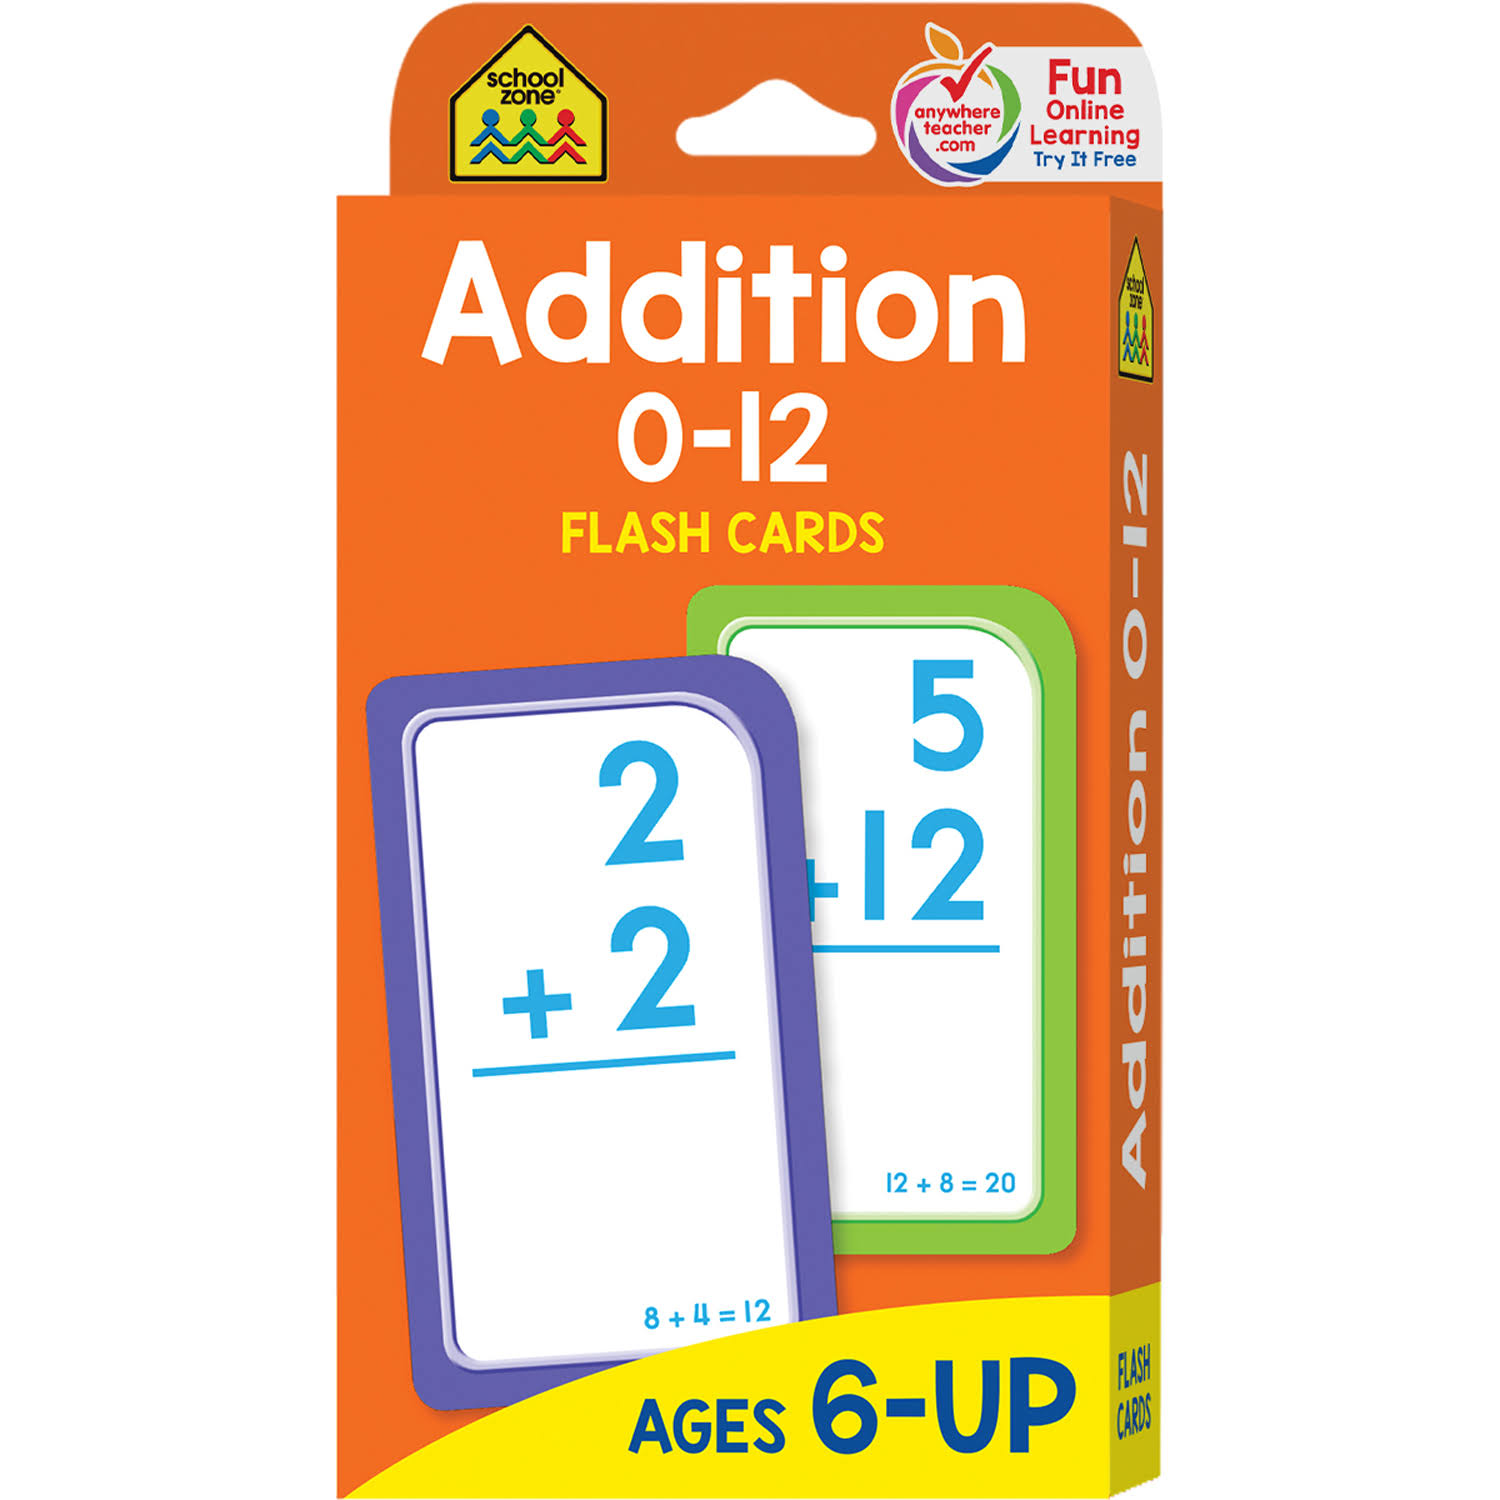 School Zone Flash Cards, Addition, 0-12